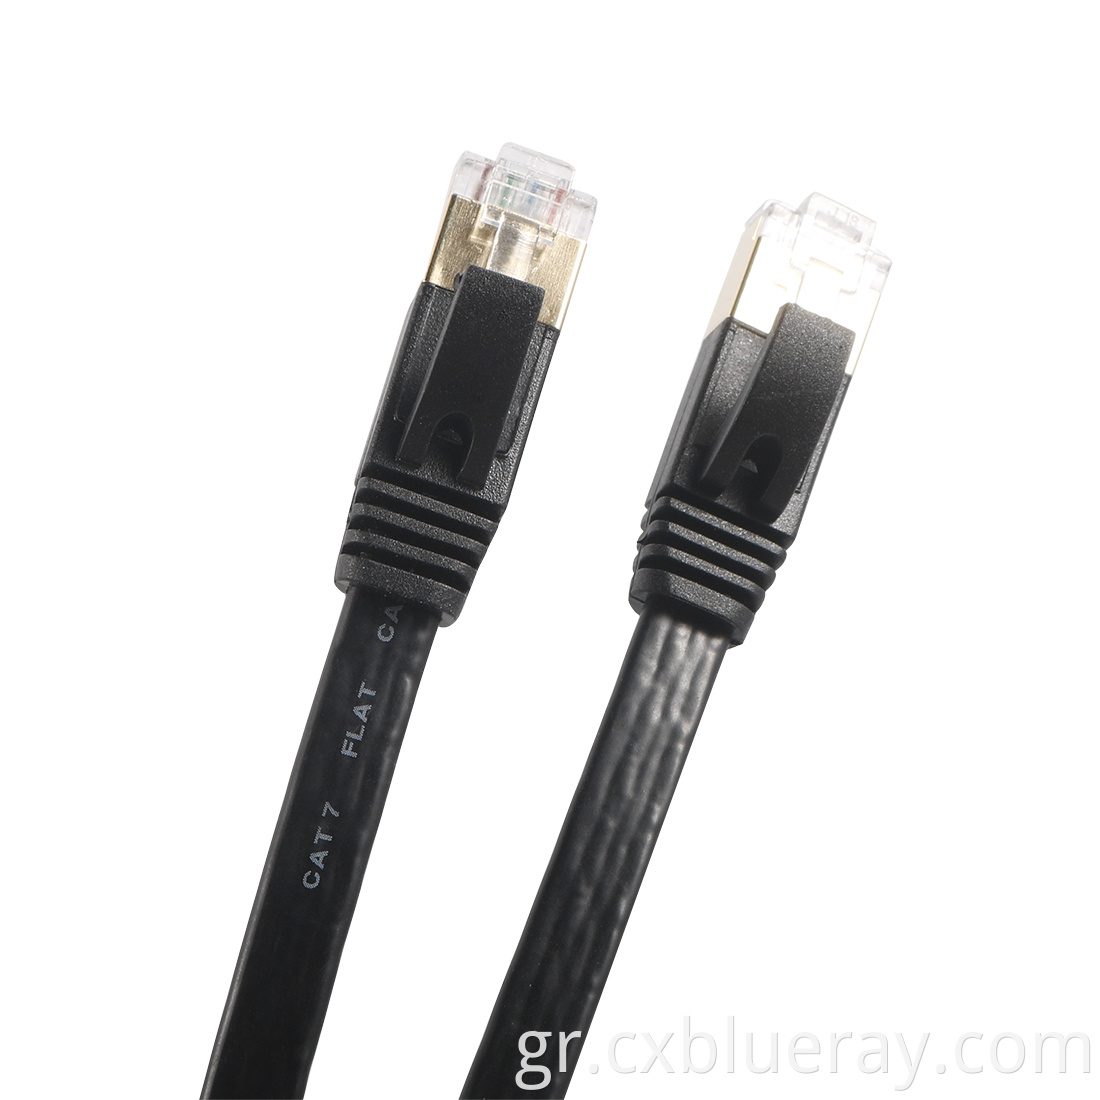 Rj45 Ethernet Cable